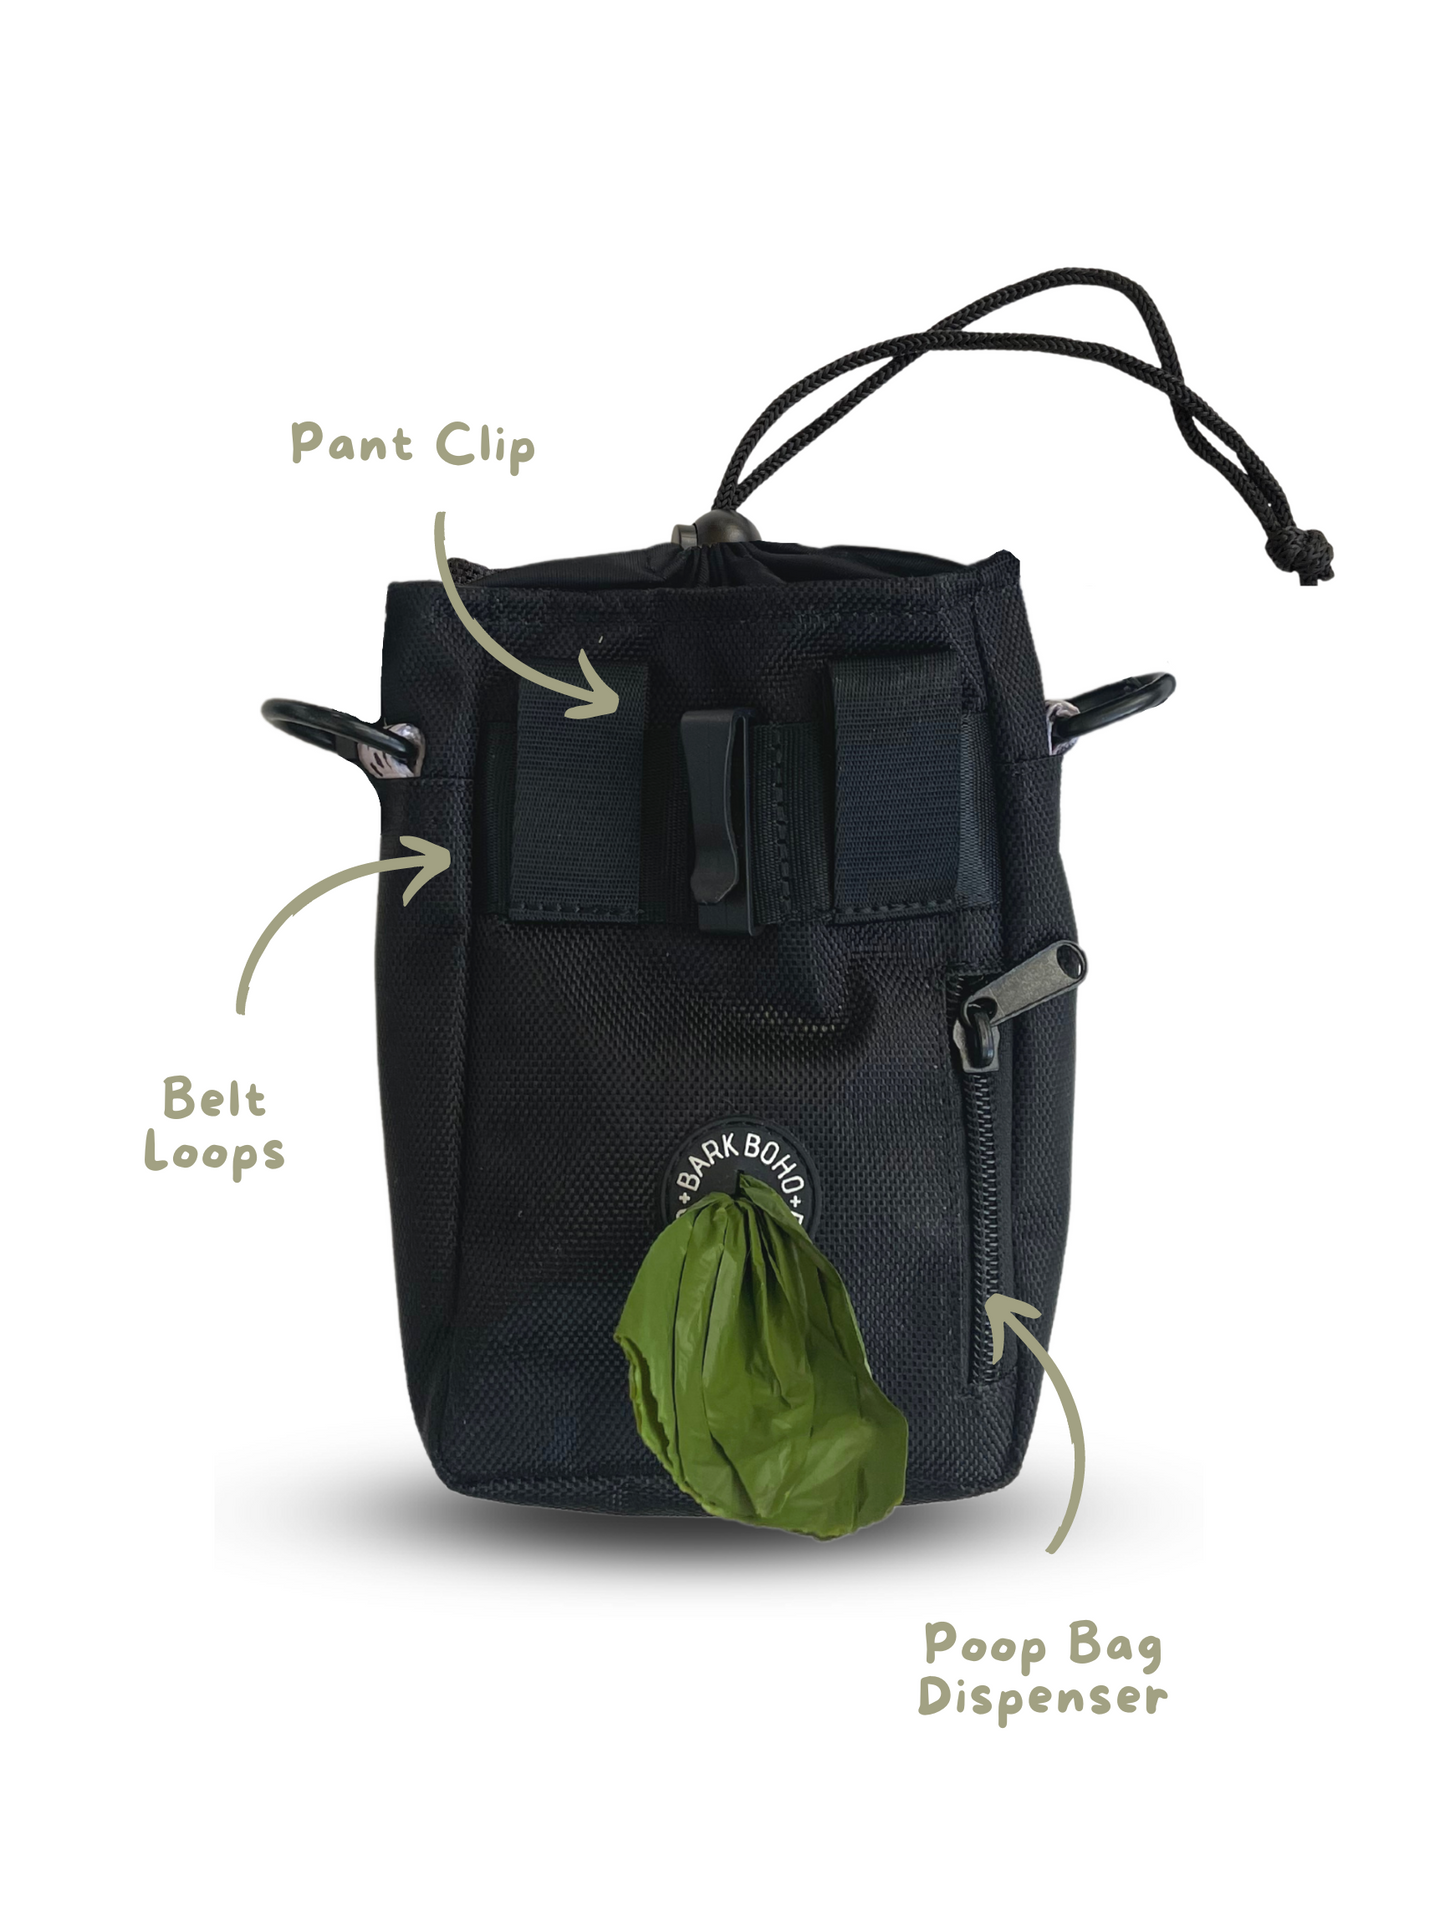 Walk Bag (strap sold separately)